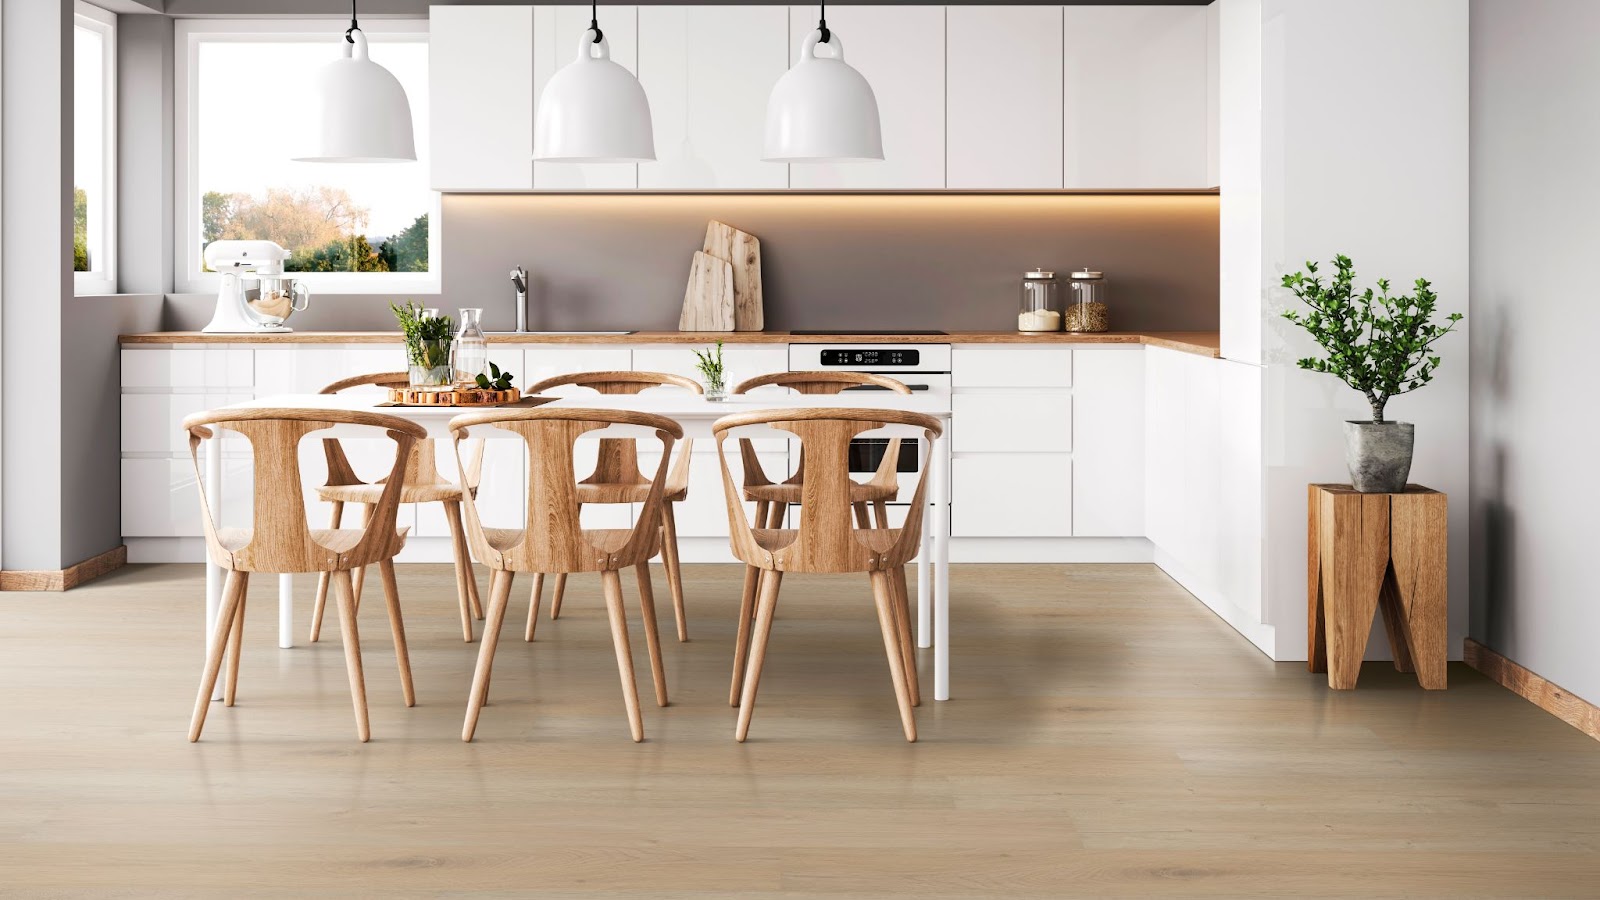 Luxury vinyl flooring in a kitchen, installation services available